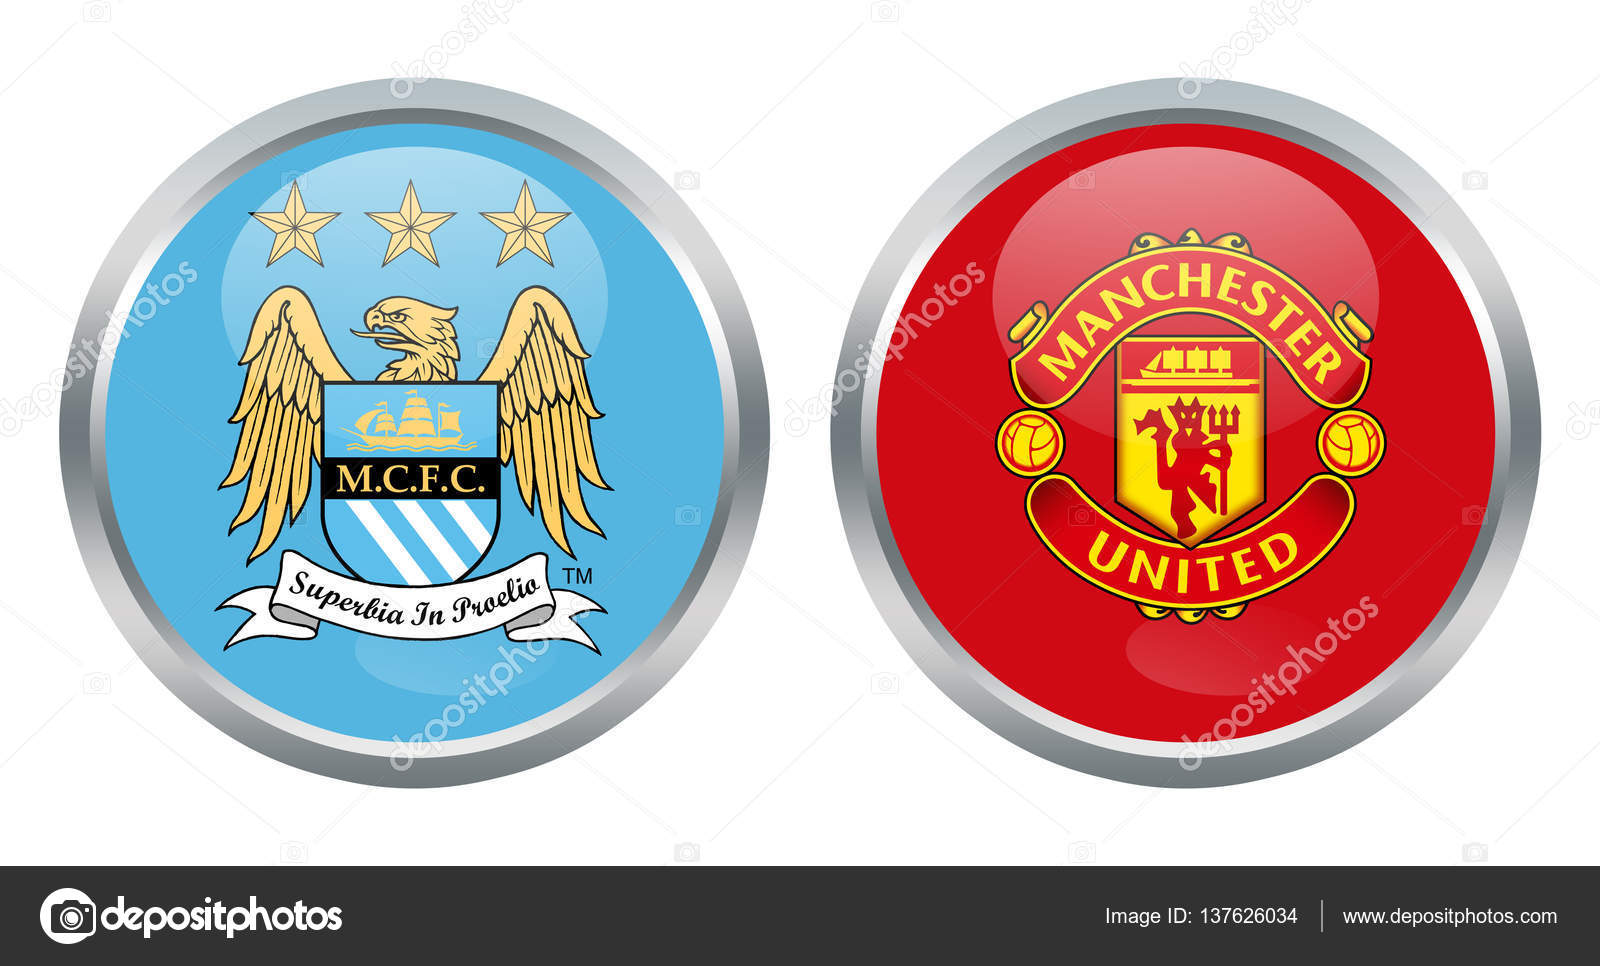 Man city vs Manchesteru united 137626034